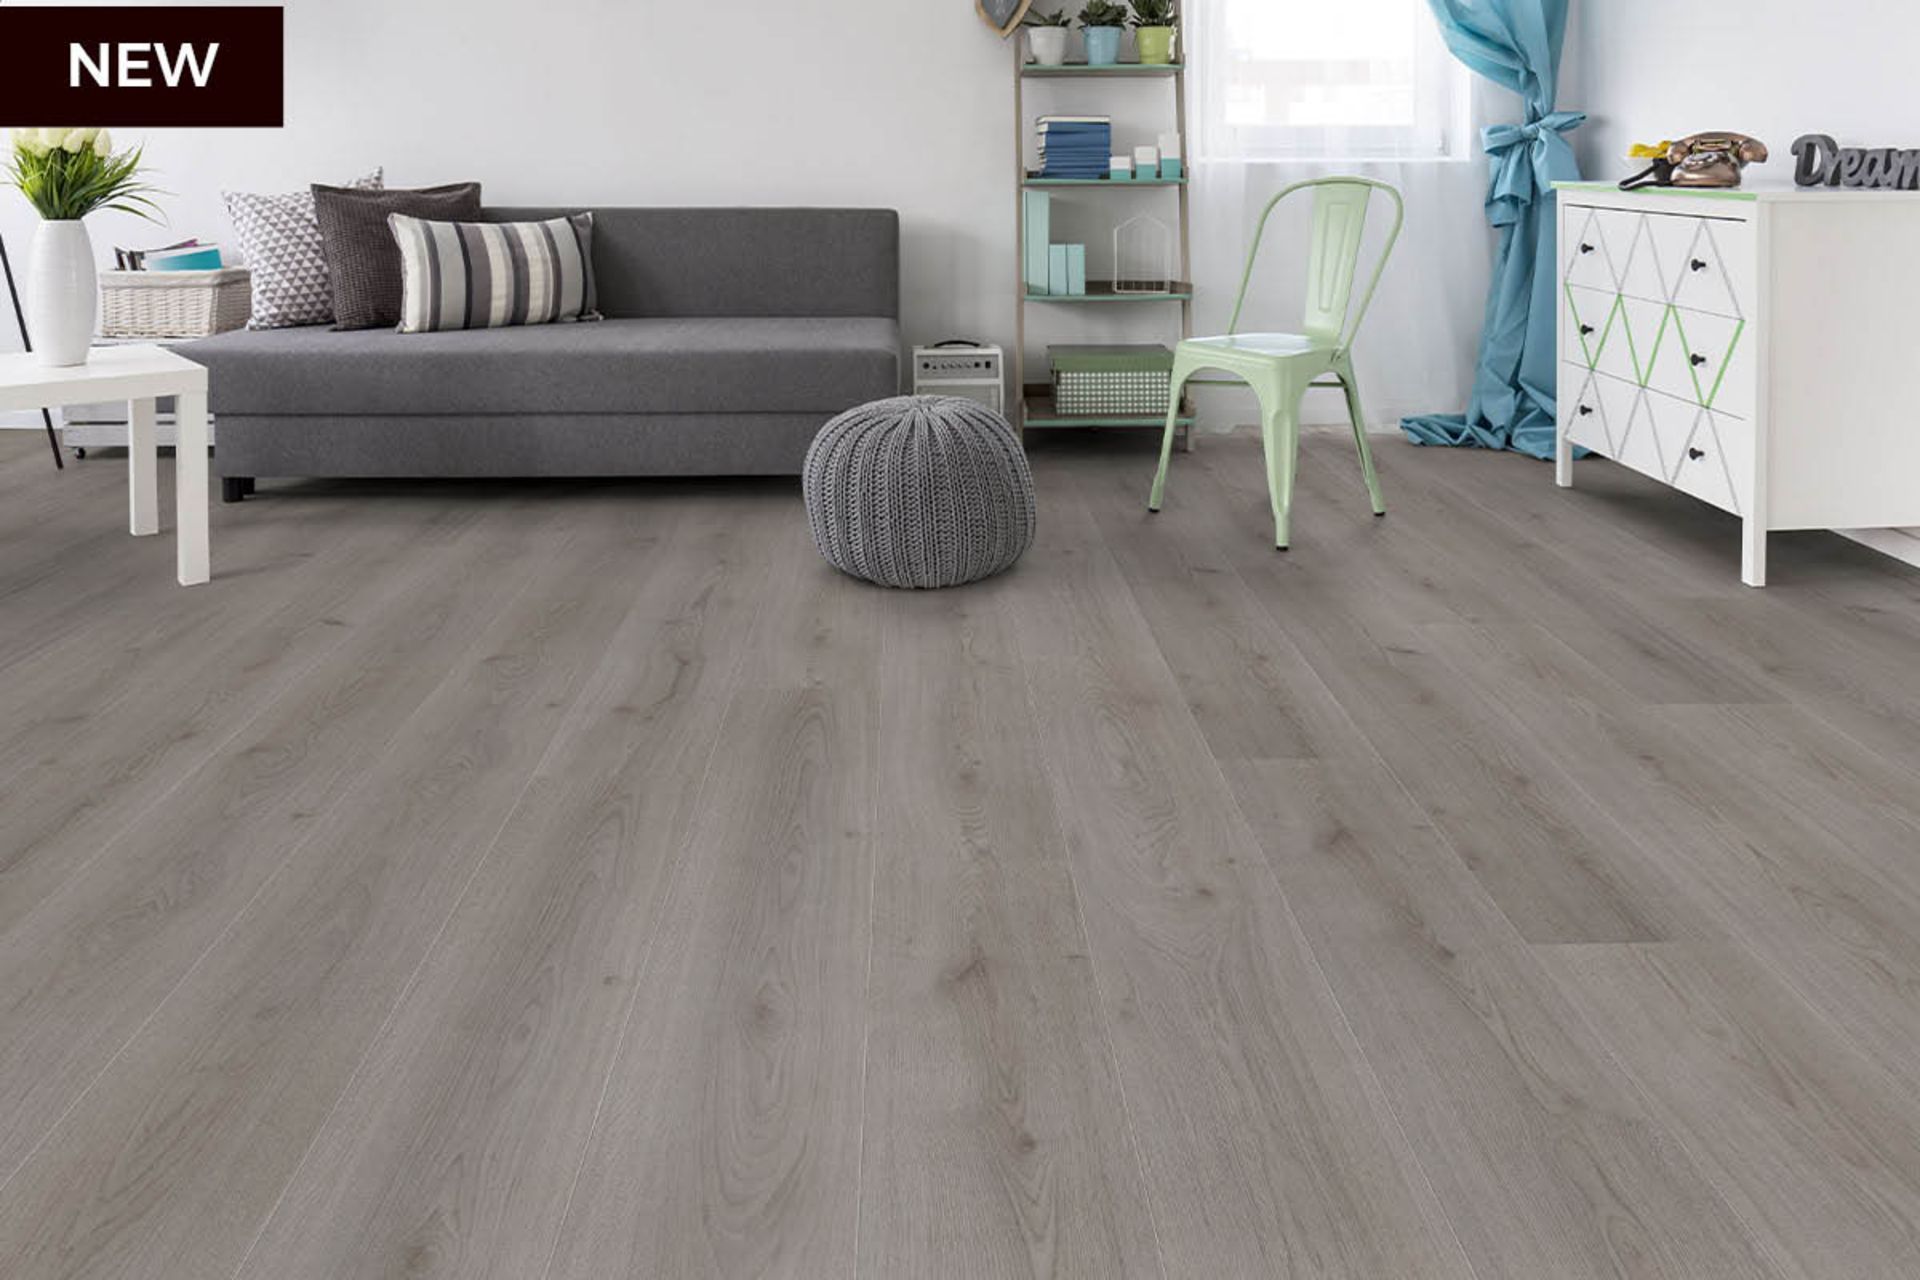 NEW 6.36m2 WILD DOVE OAK LAMINATE FLOORING . The elegant mid-grey hue of this floor complements...